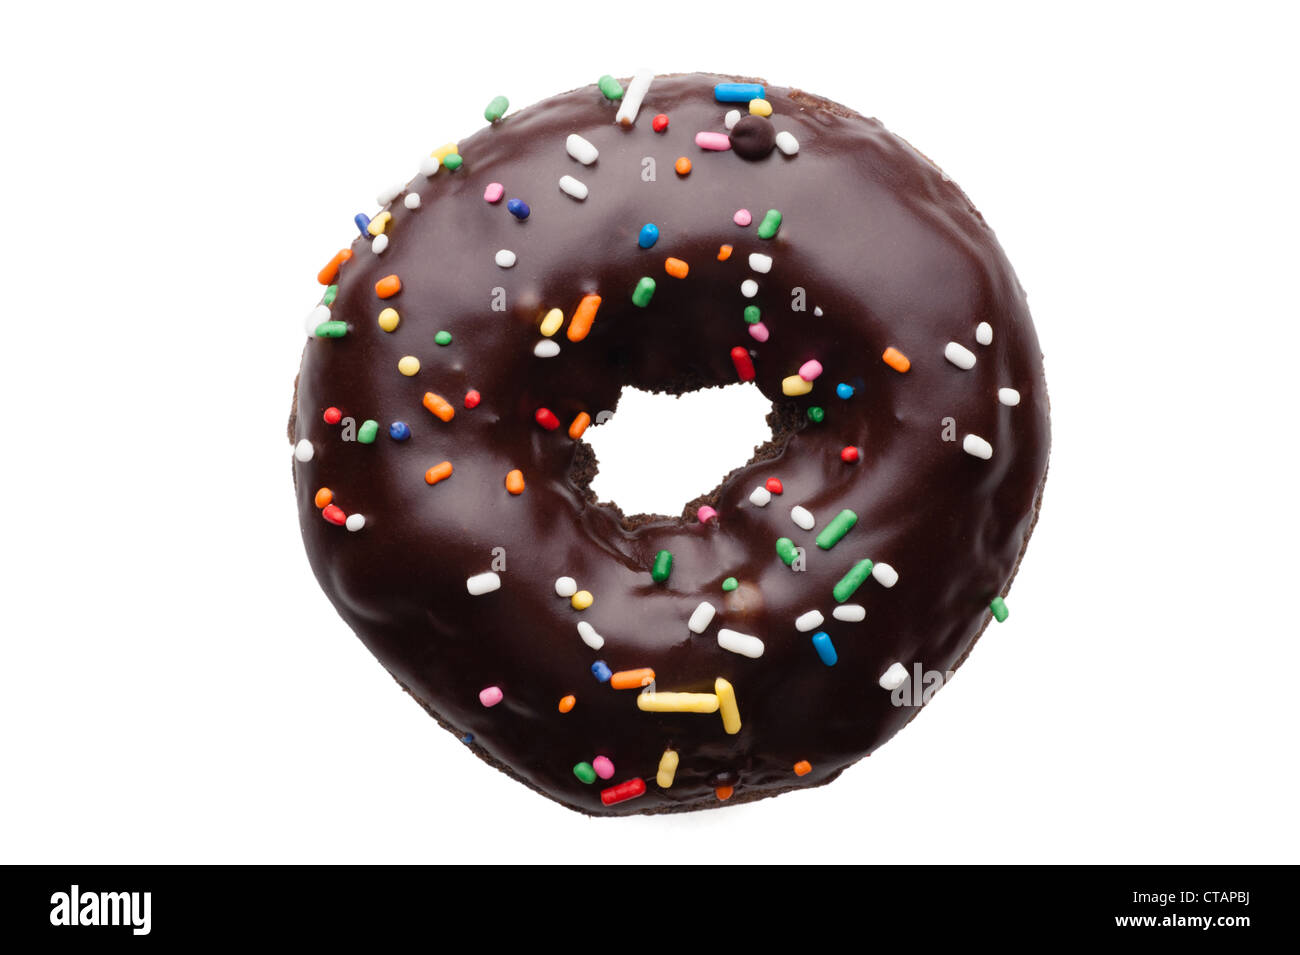 Chocolate donut, isolated on white background Stock Photo